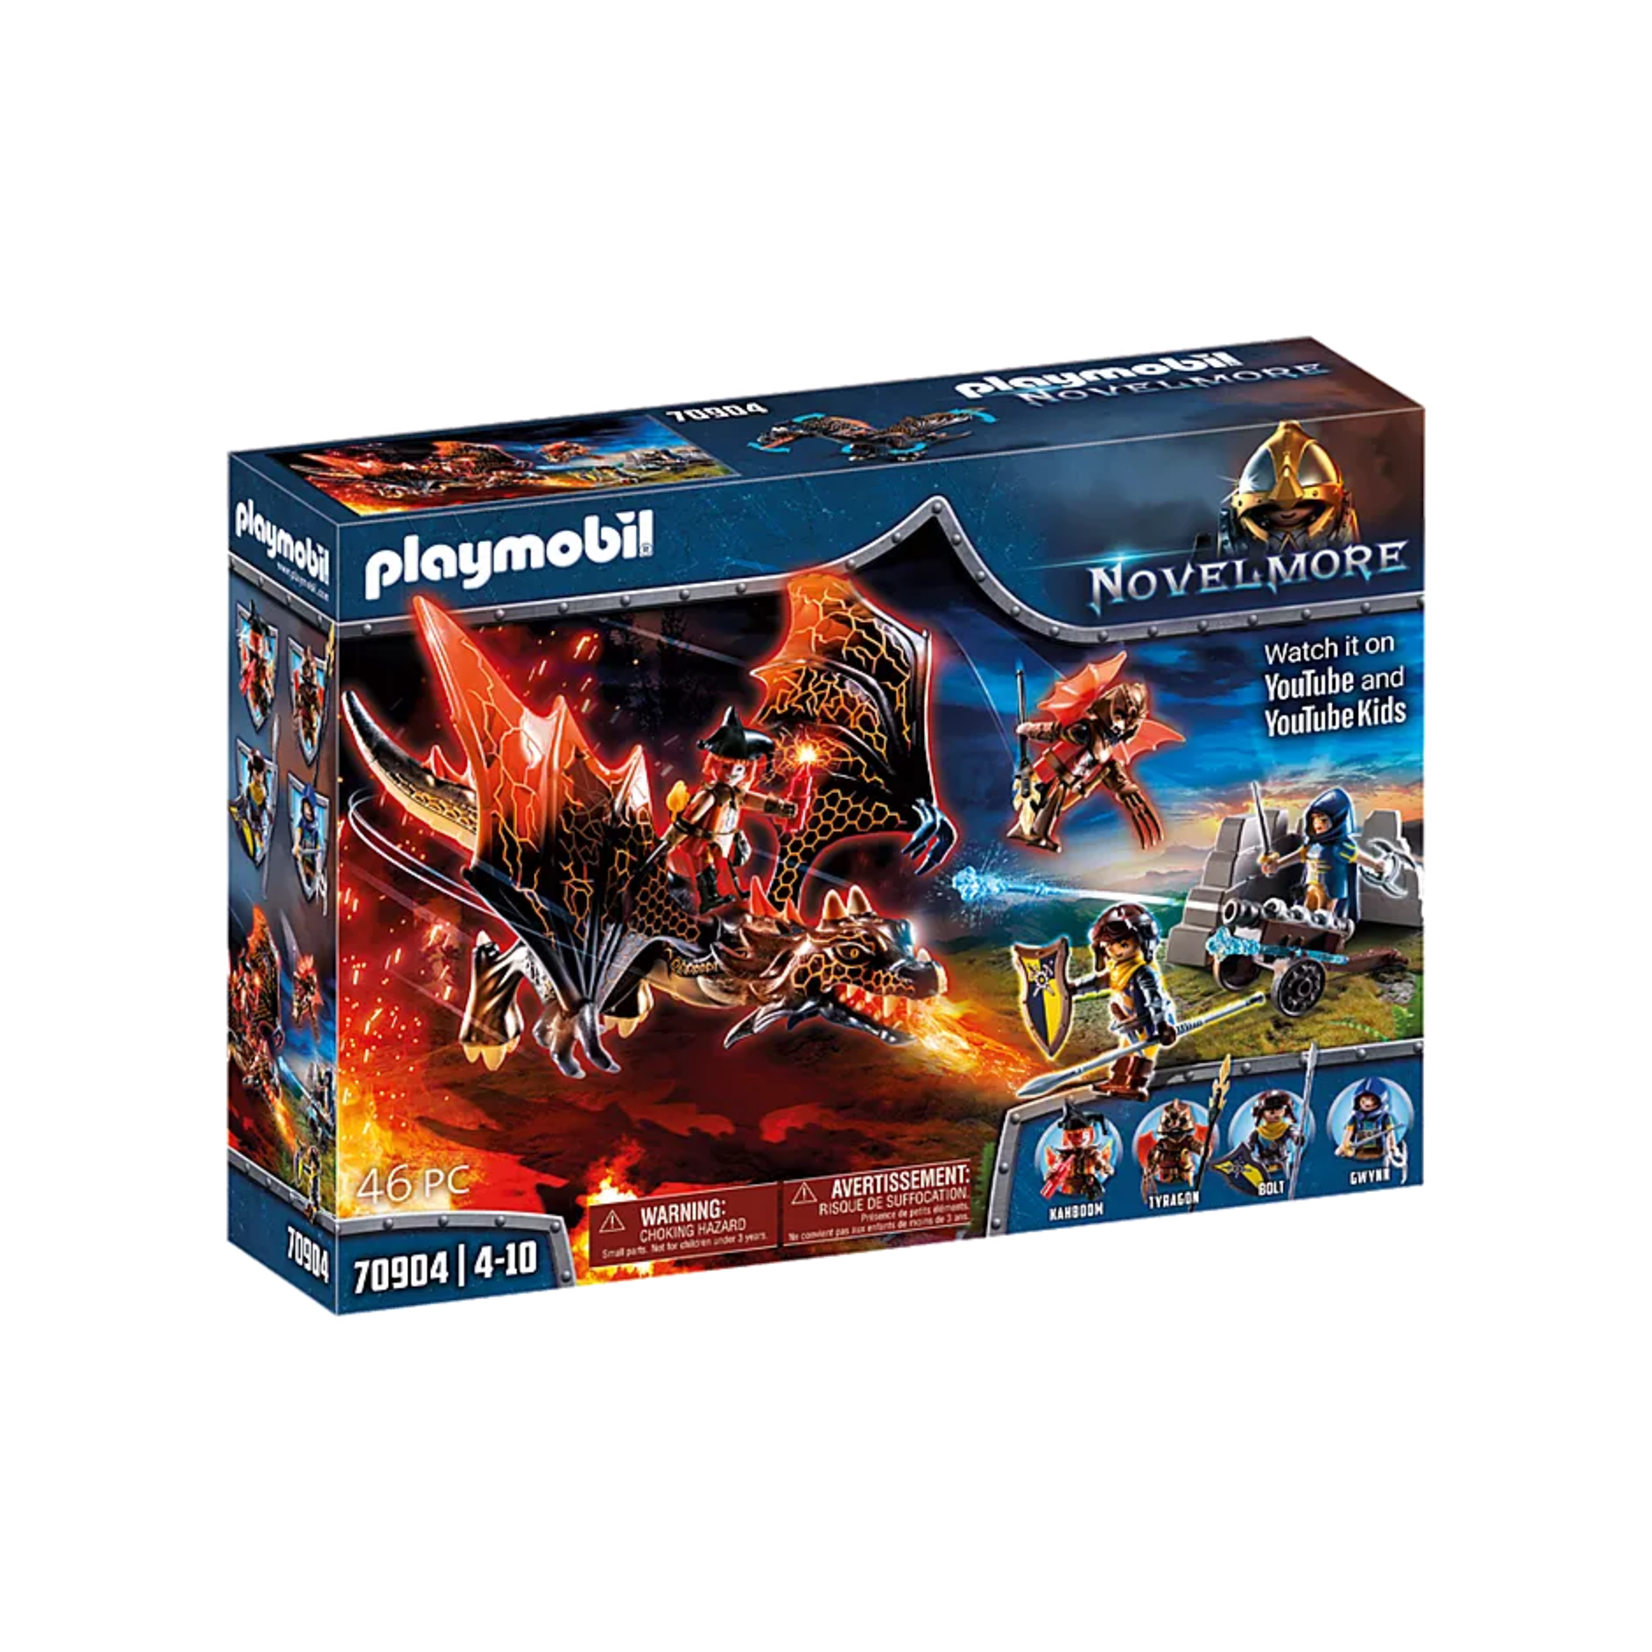 Playmobil Novelmore Dragon Attack - Playmobil 70904